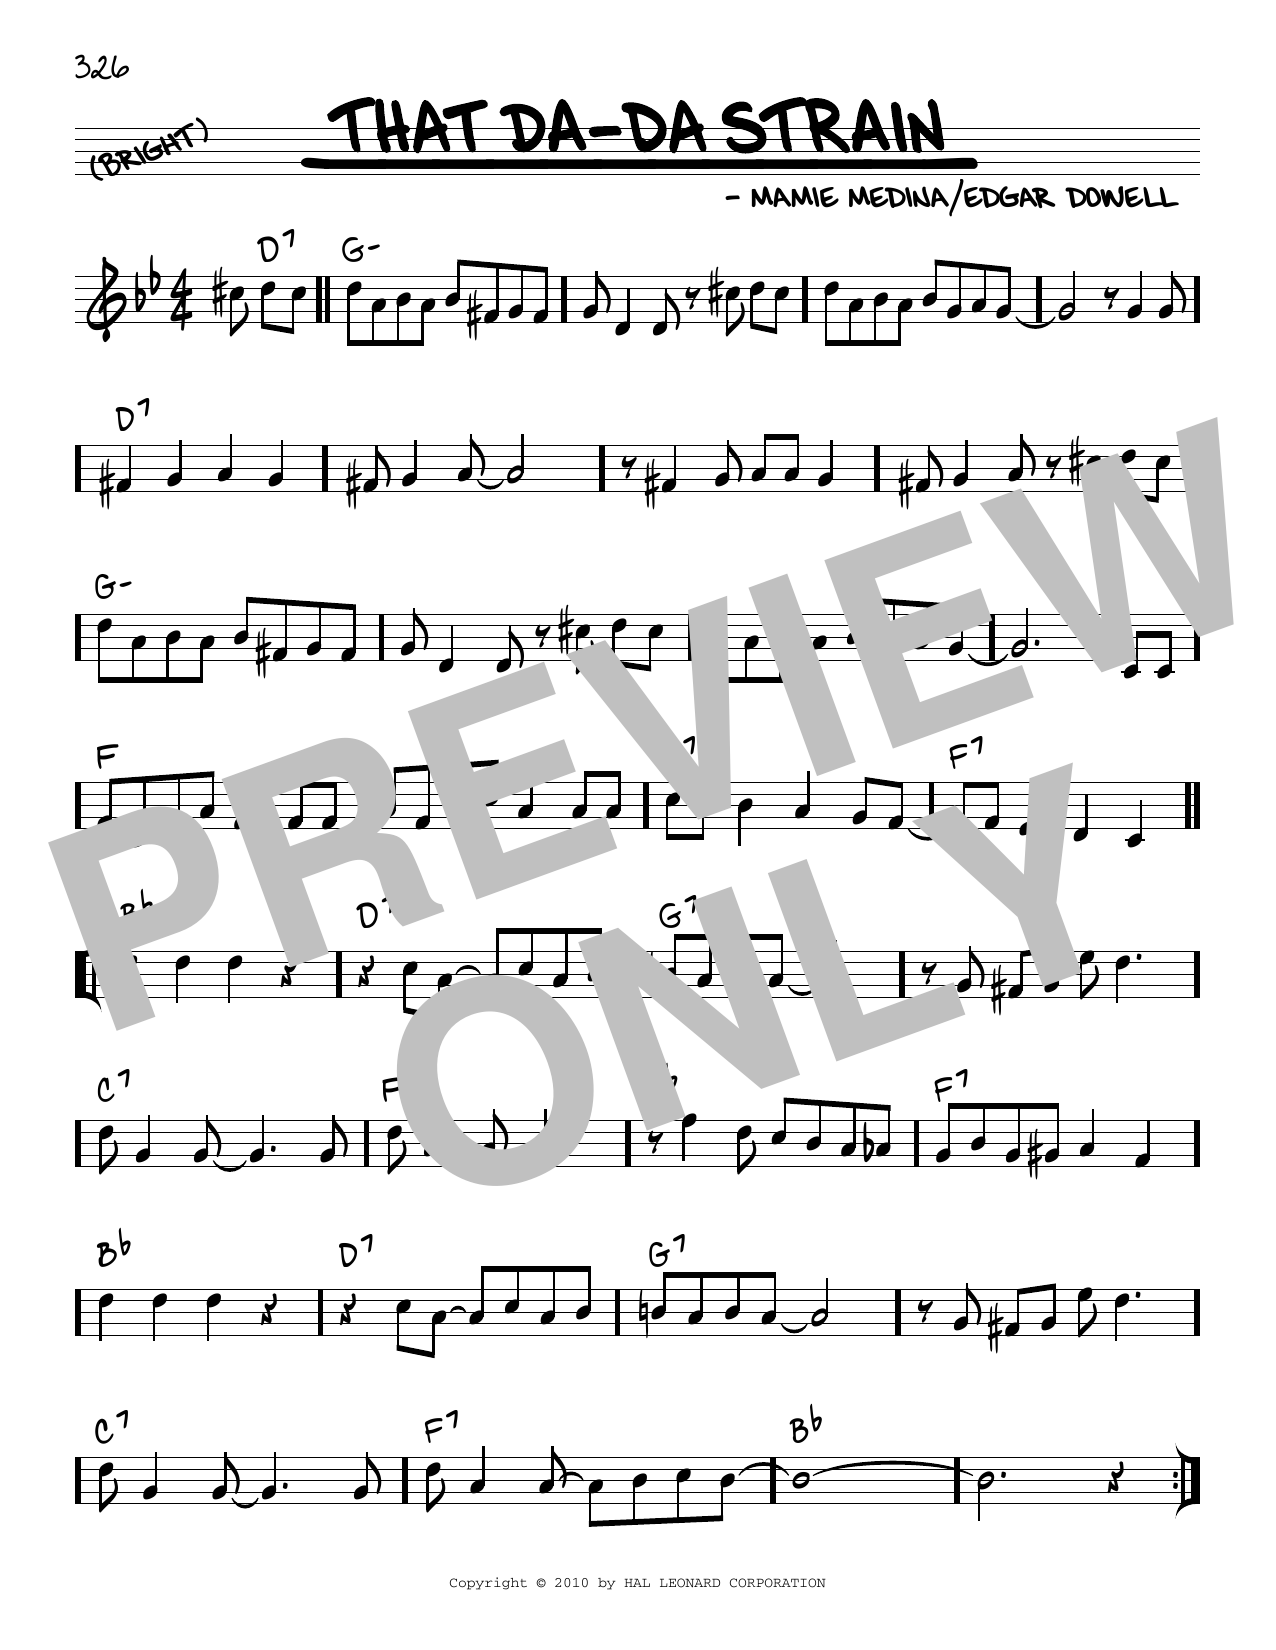 Edgar Dowell That Da-Da Strain (arr. Robert Rawlins) Sheet Music Notes & Chords for Real Book – Melody, Lyrics & Chords - Download or Print PDF